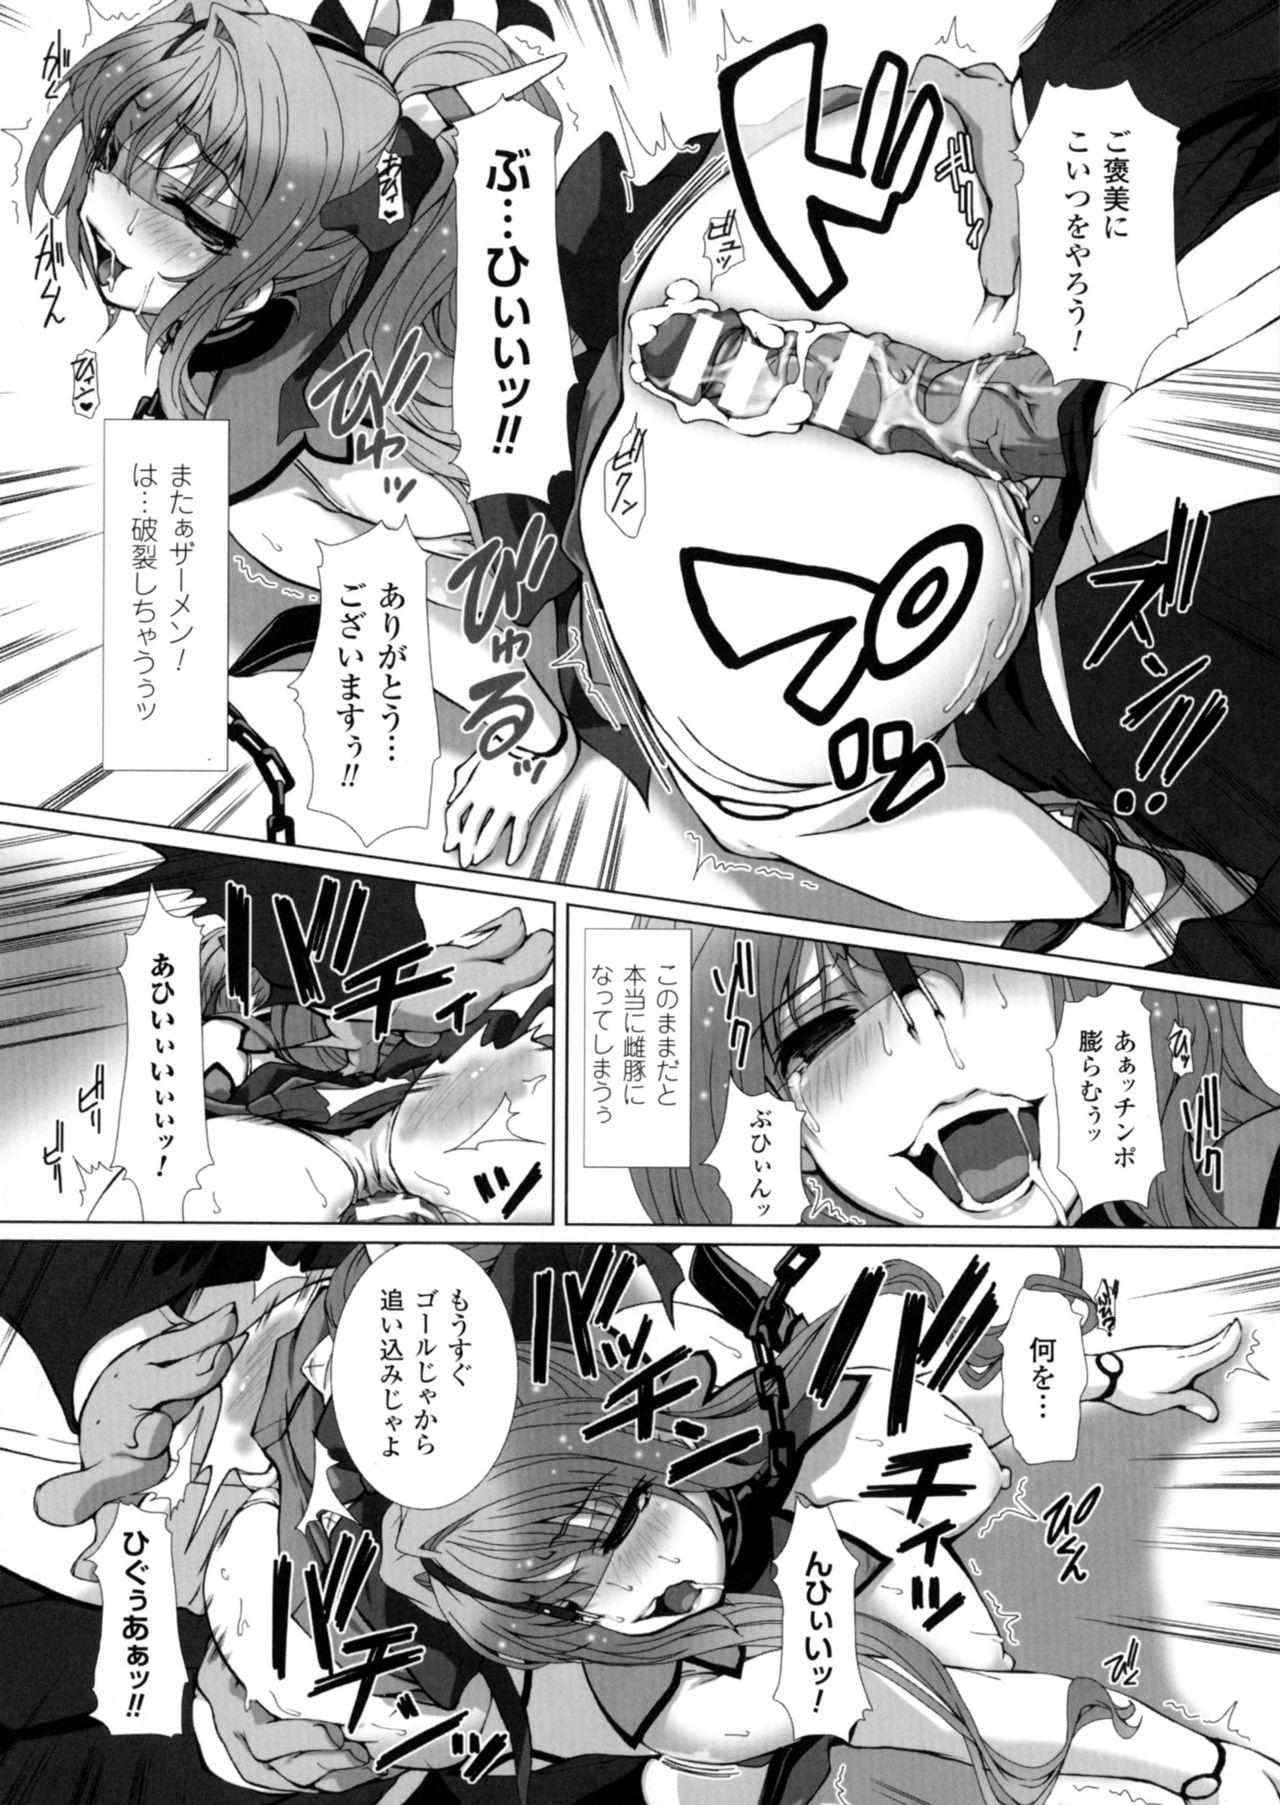 Seigi no Heroine Kangoku File DX Vol. 4 43